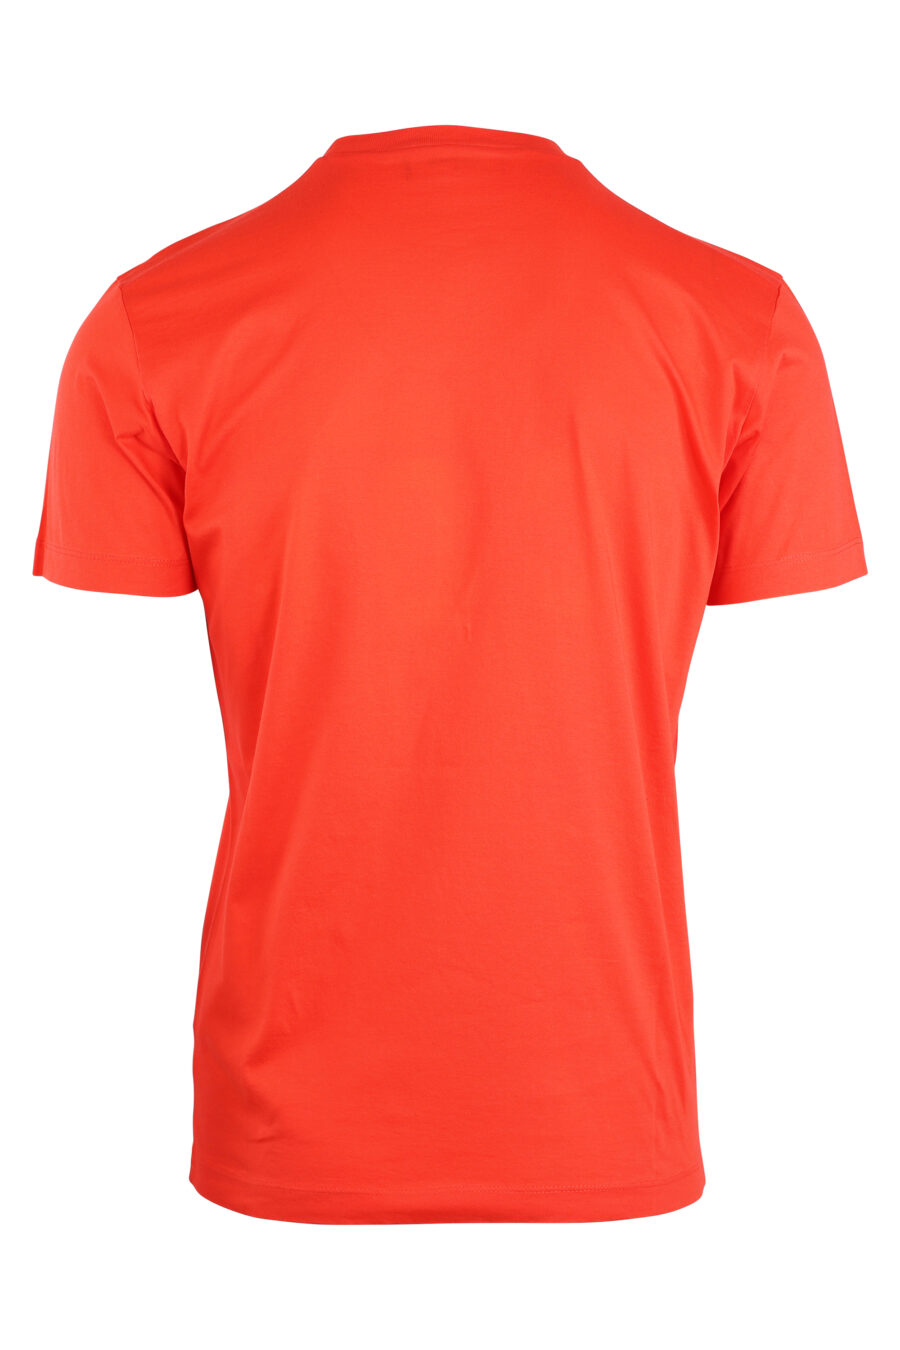 Orangefarbenes T-Shirt mit doppeltem "Icon"-Logo - IMG 8929